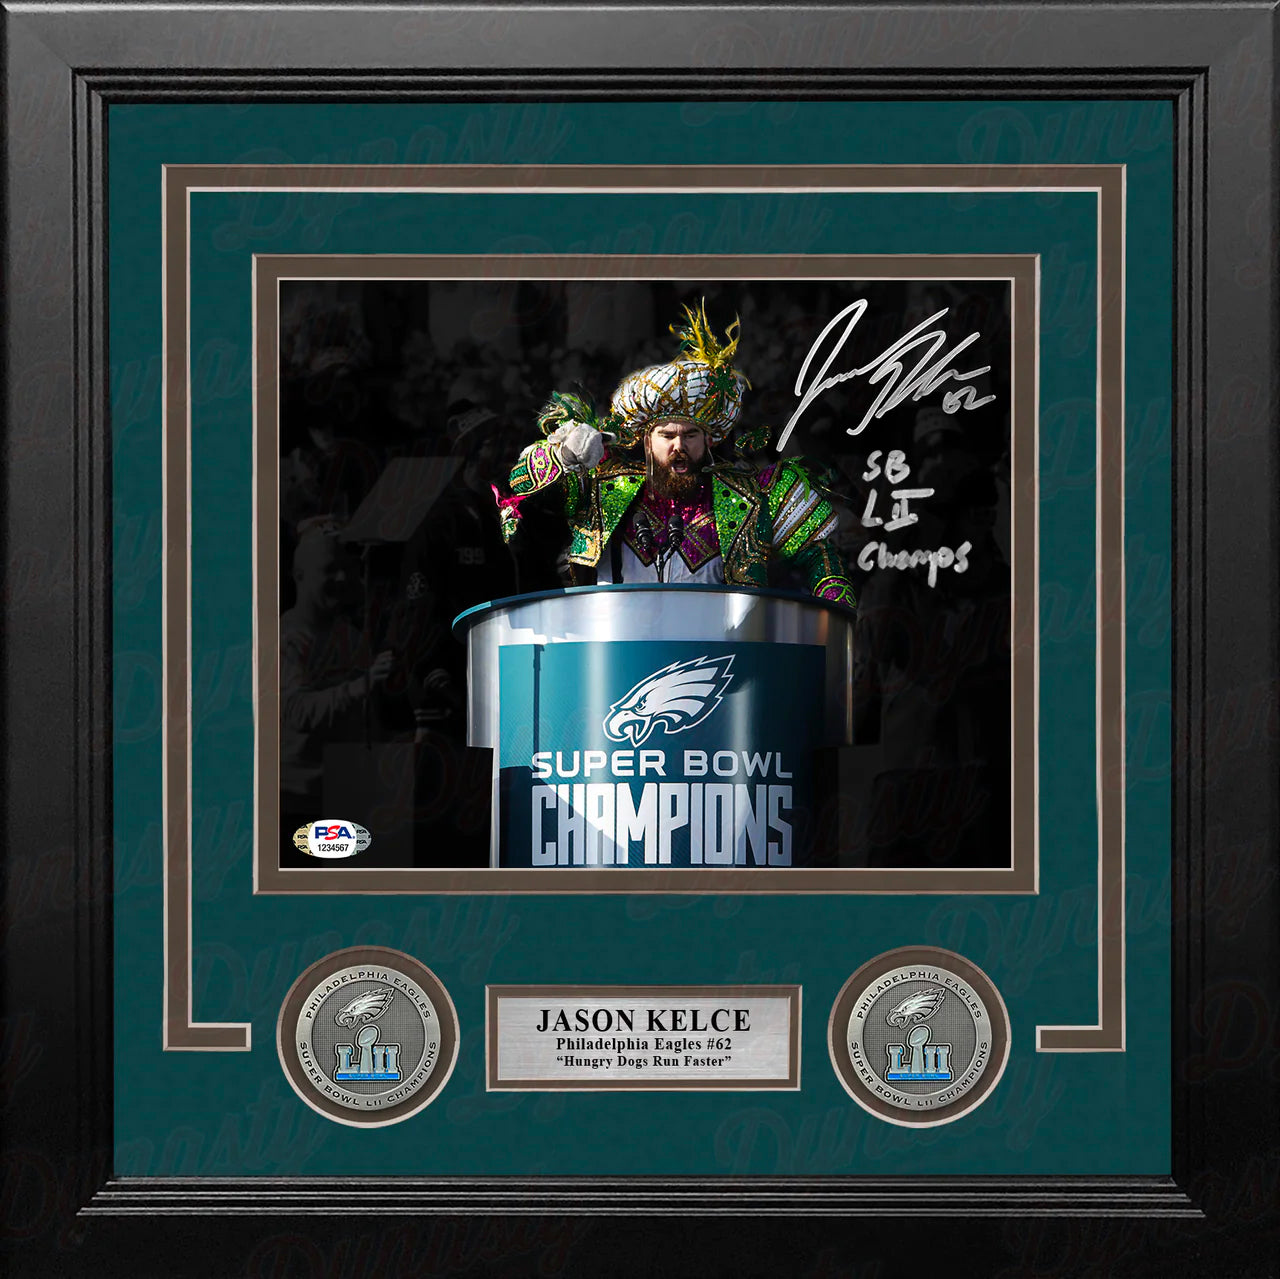 Jason Kelce Super Bowl Speech Philadelphia Eagles Autographed 8x10 Framed Photo - Super Bowl Champs